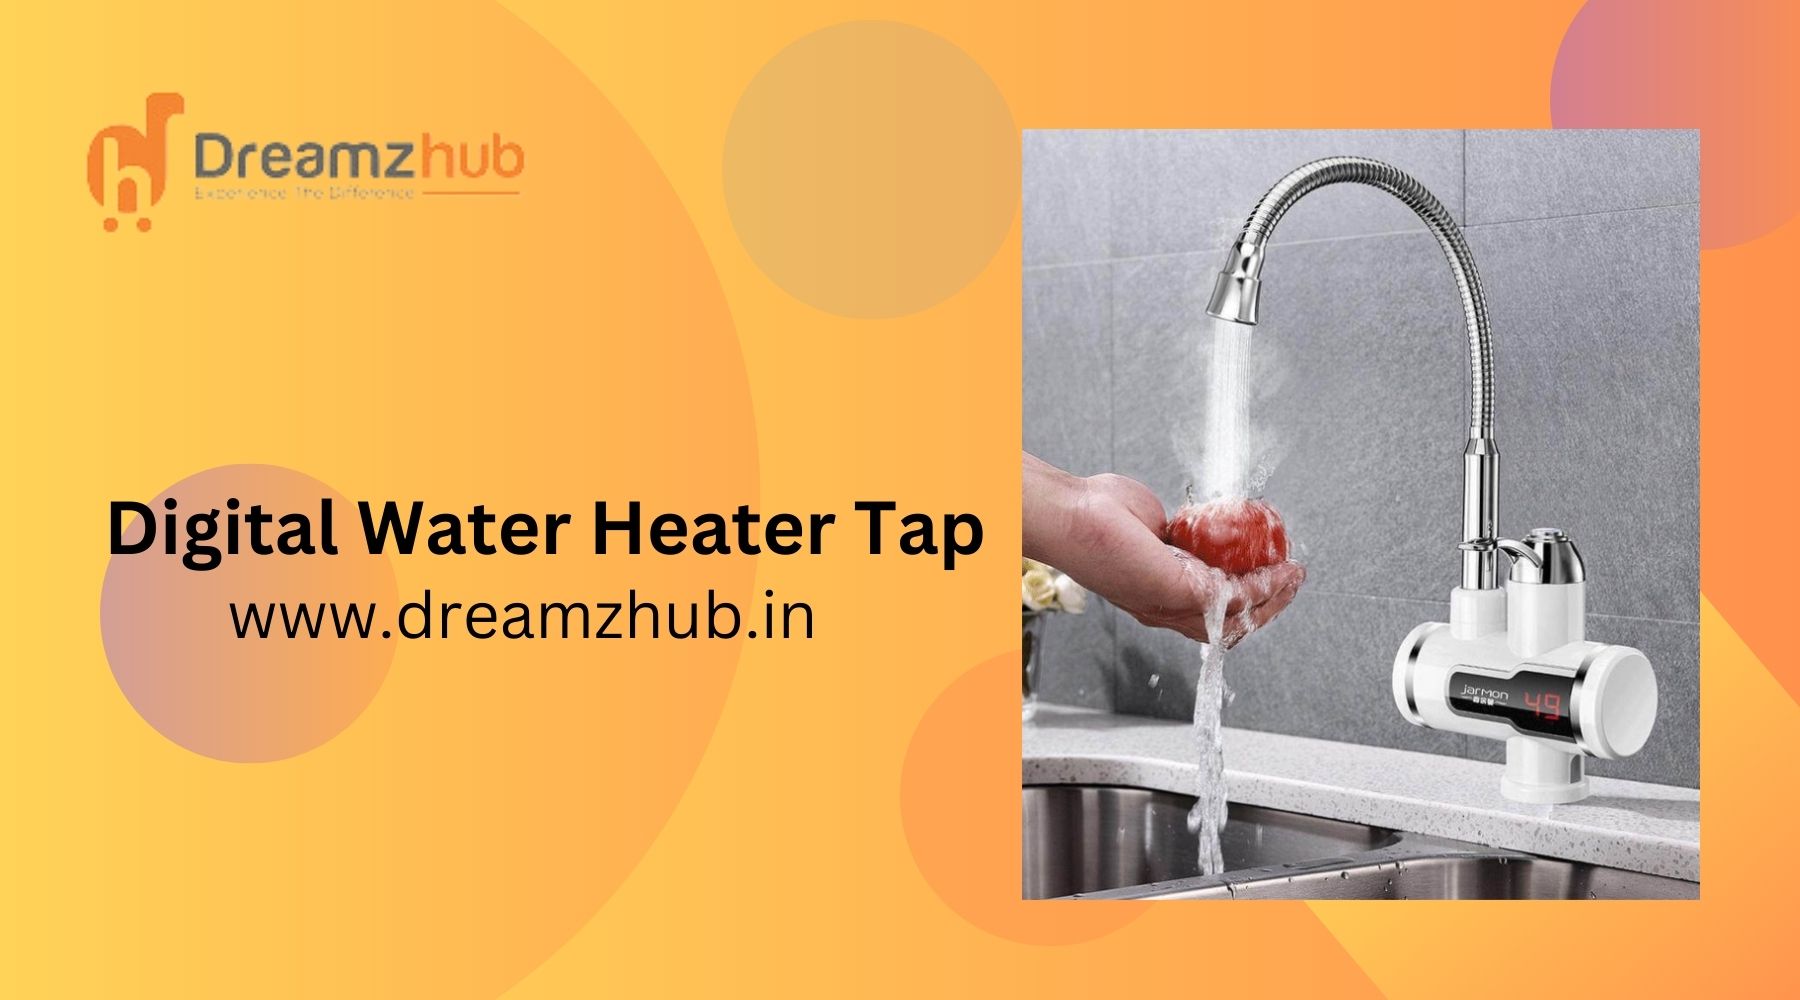 Revolutionizing Hot Water: The Innovative Digital Water Heater Tap